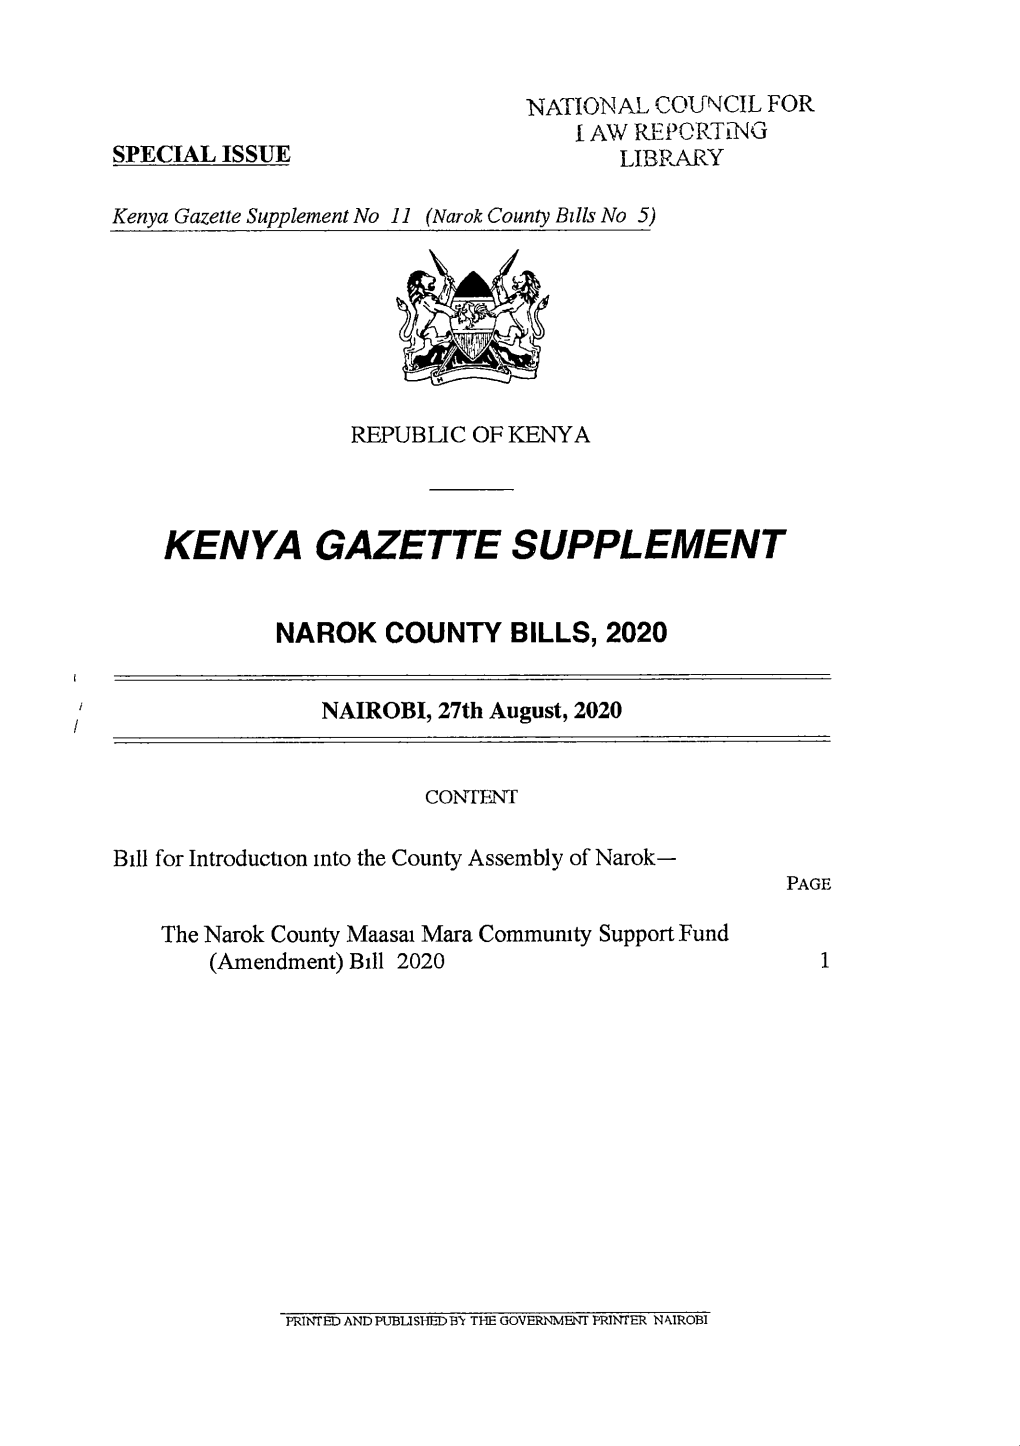 Narok County Maasai Mara Community Support Fund (Amendment)Bill 2020 1